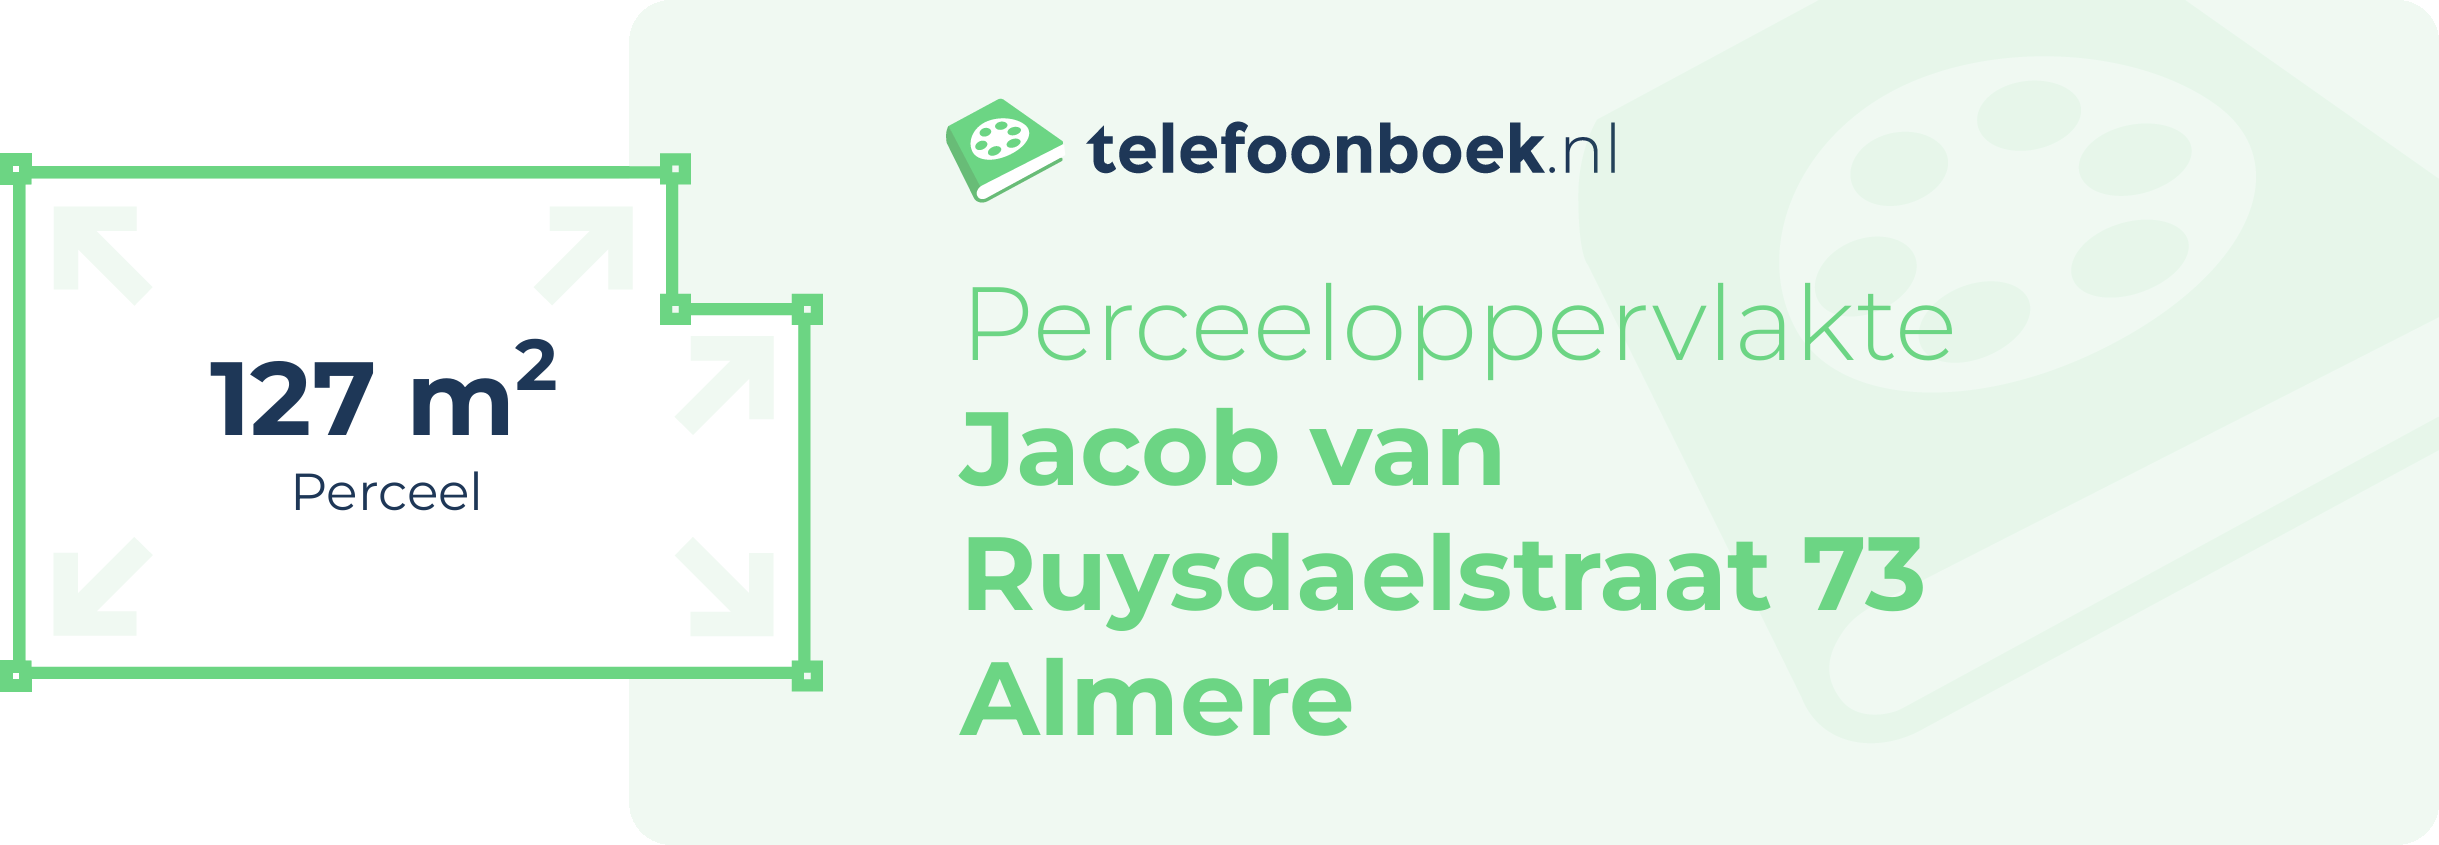 Perceeloppervlakte Jacob Van Ruysdaelstraat 73 Almere